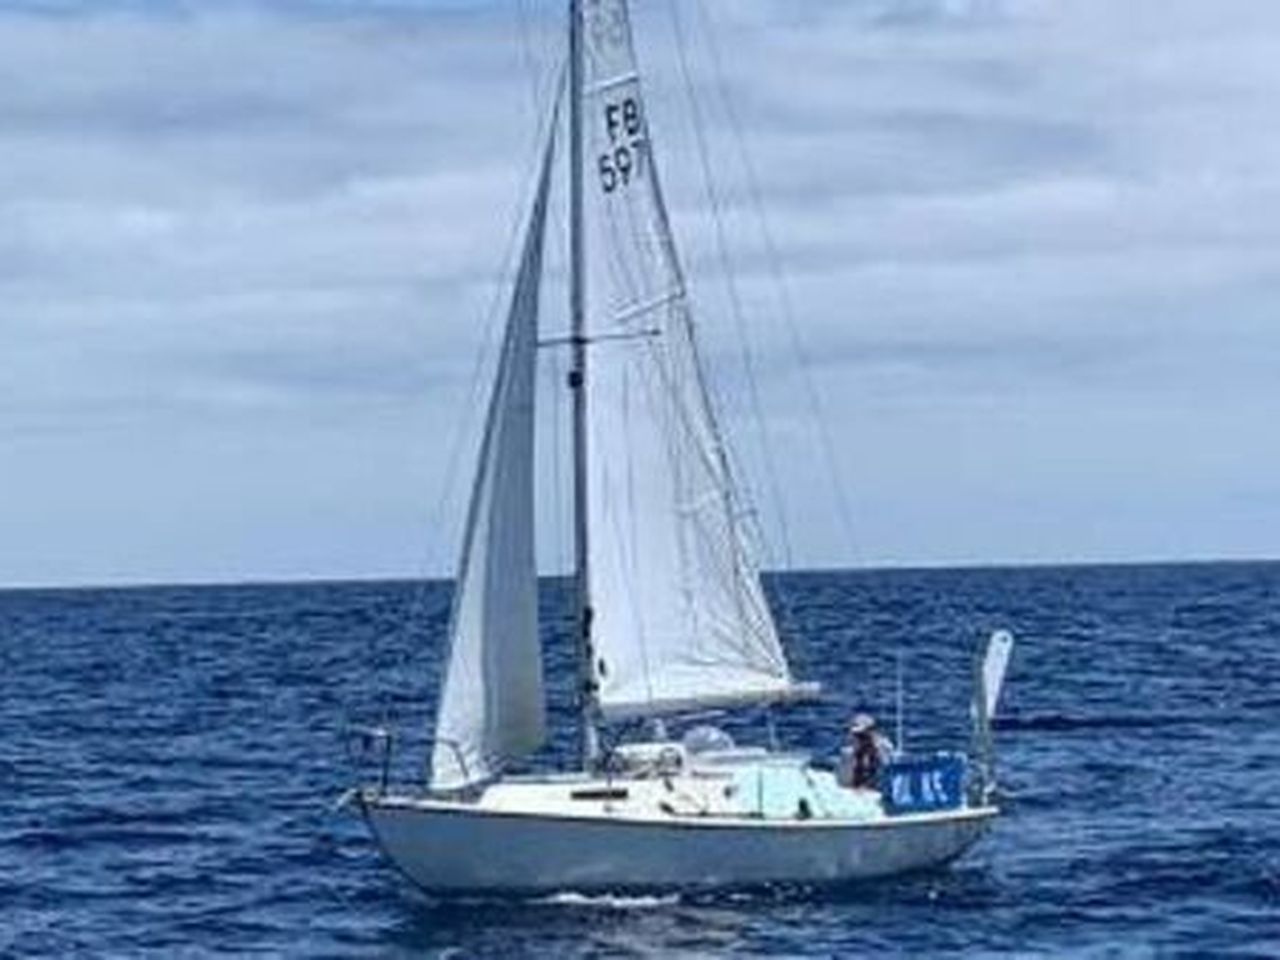 missing yacht minke